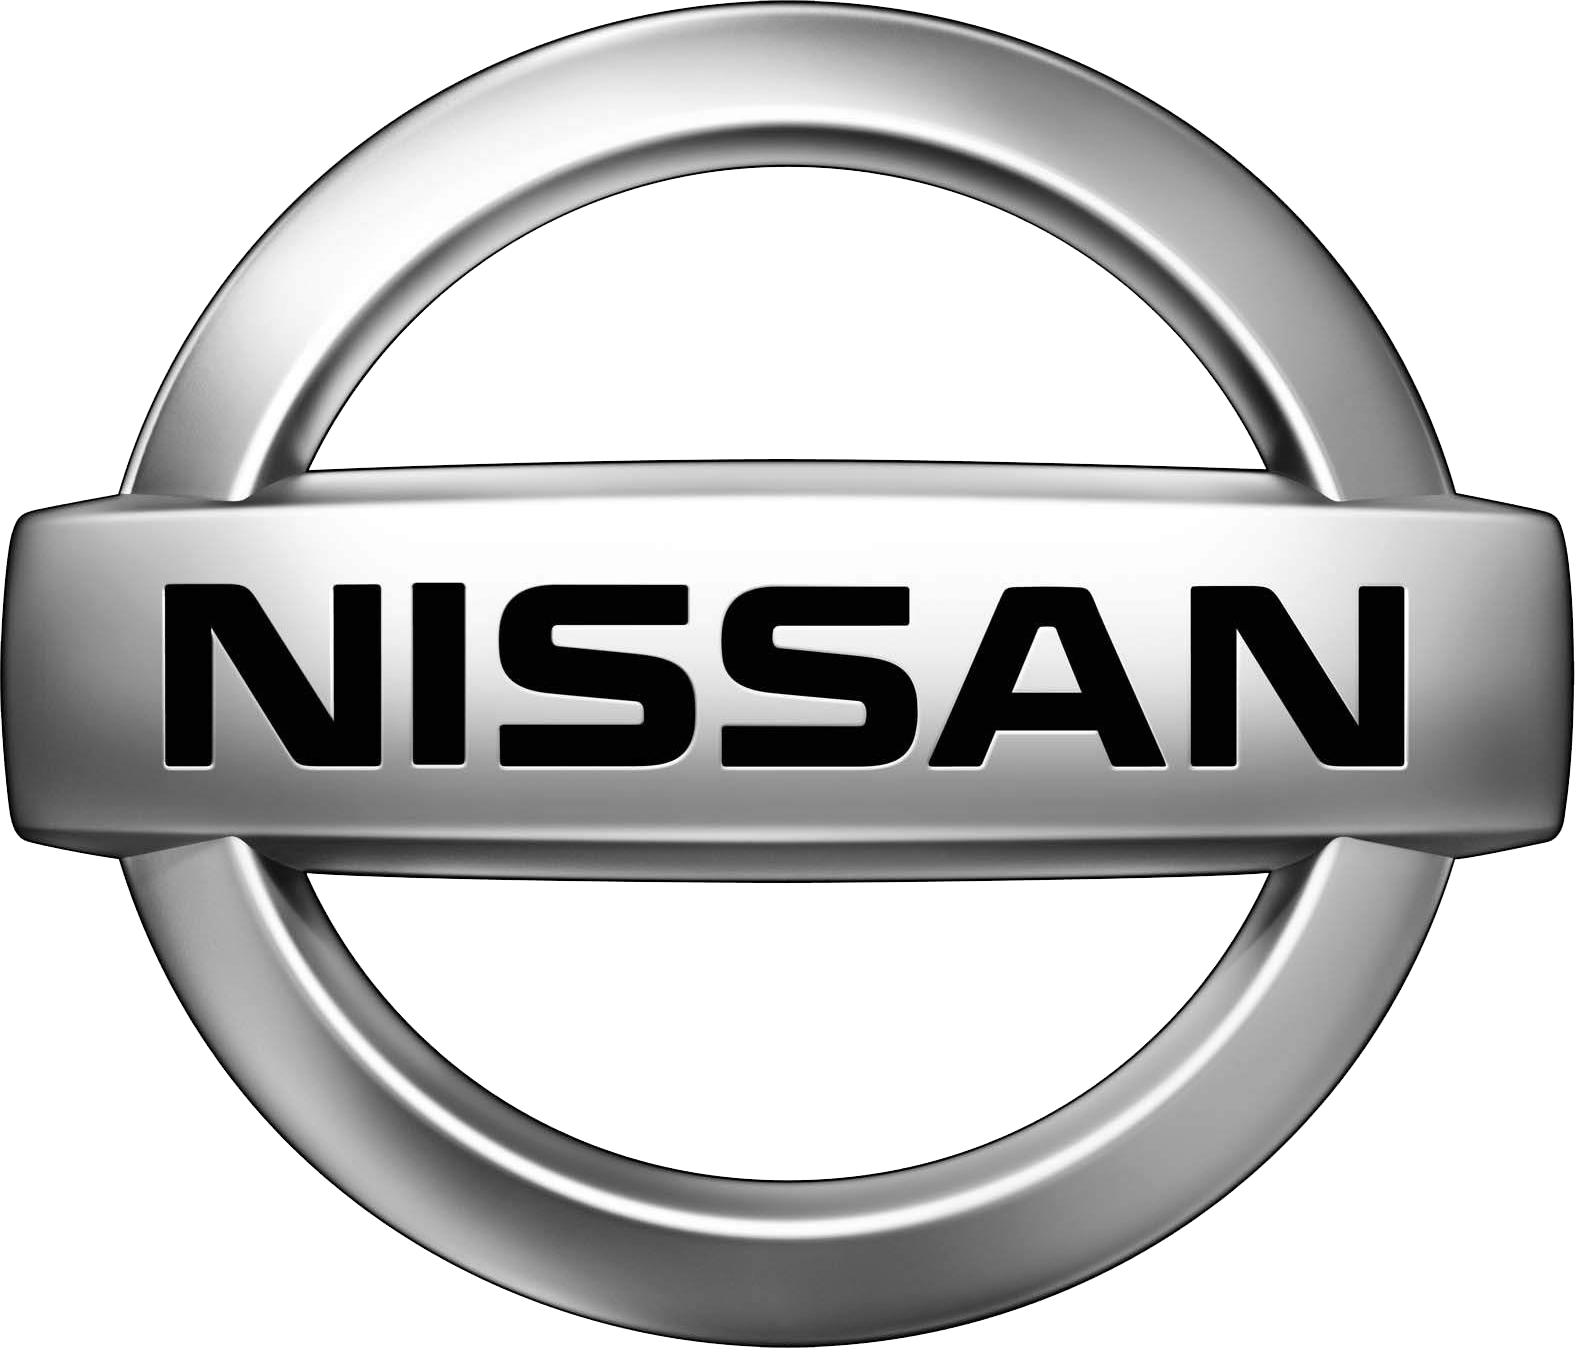 nissan car logo png brand image #2319